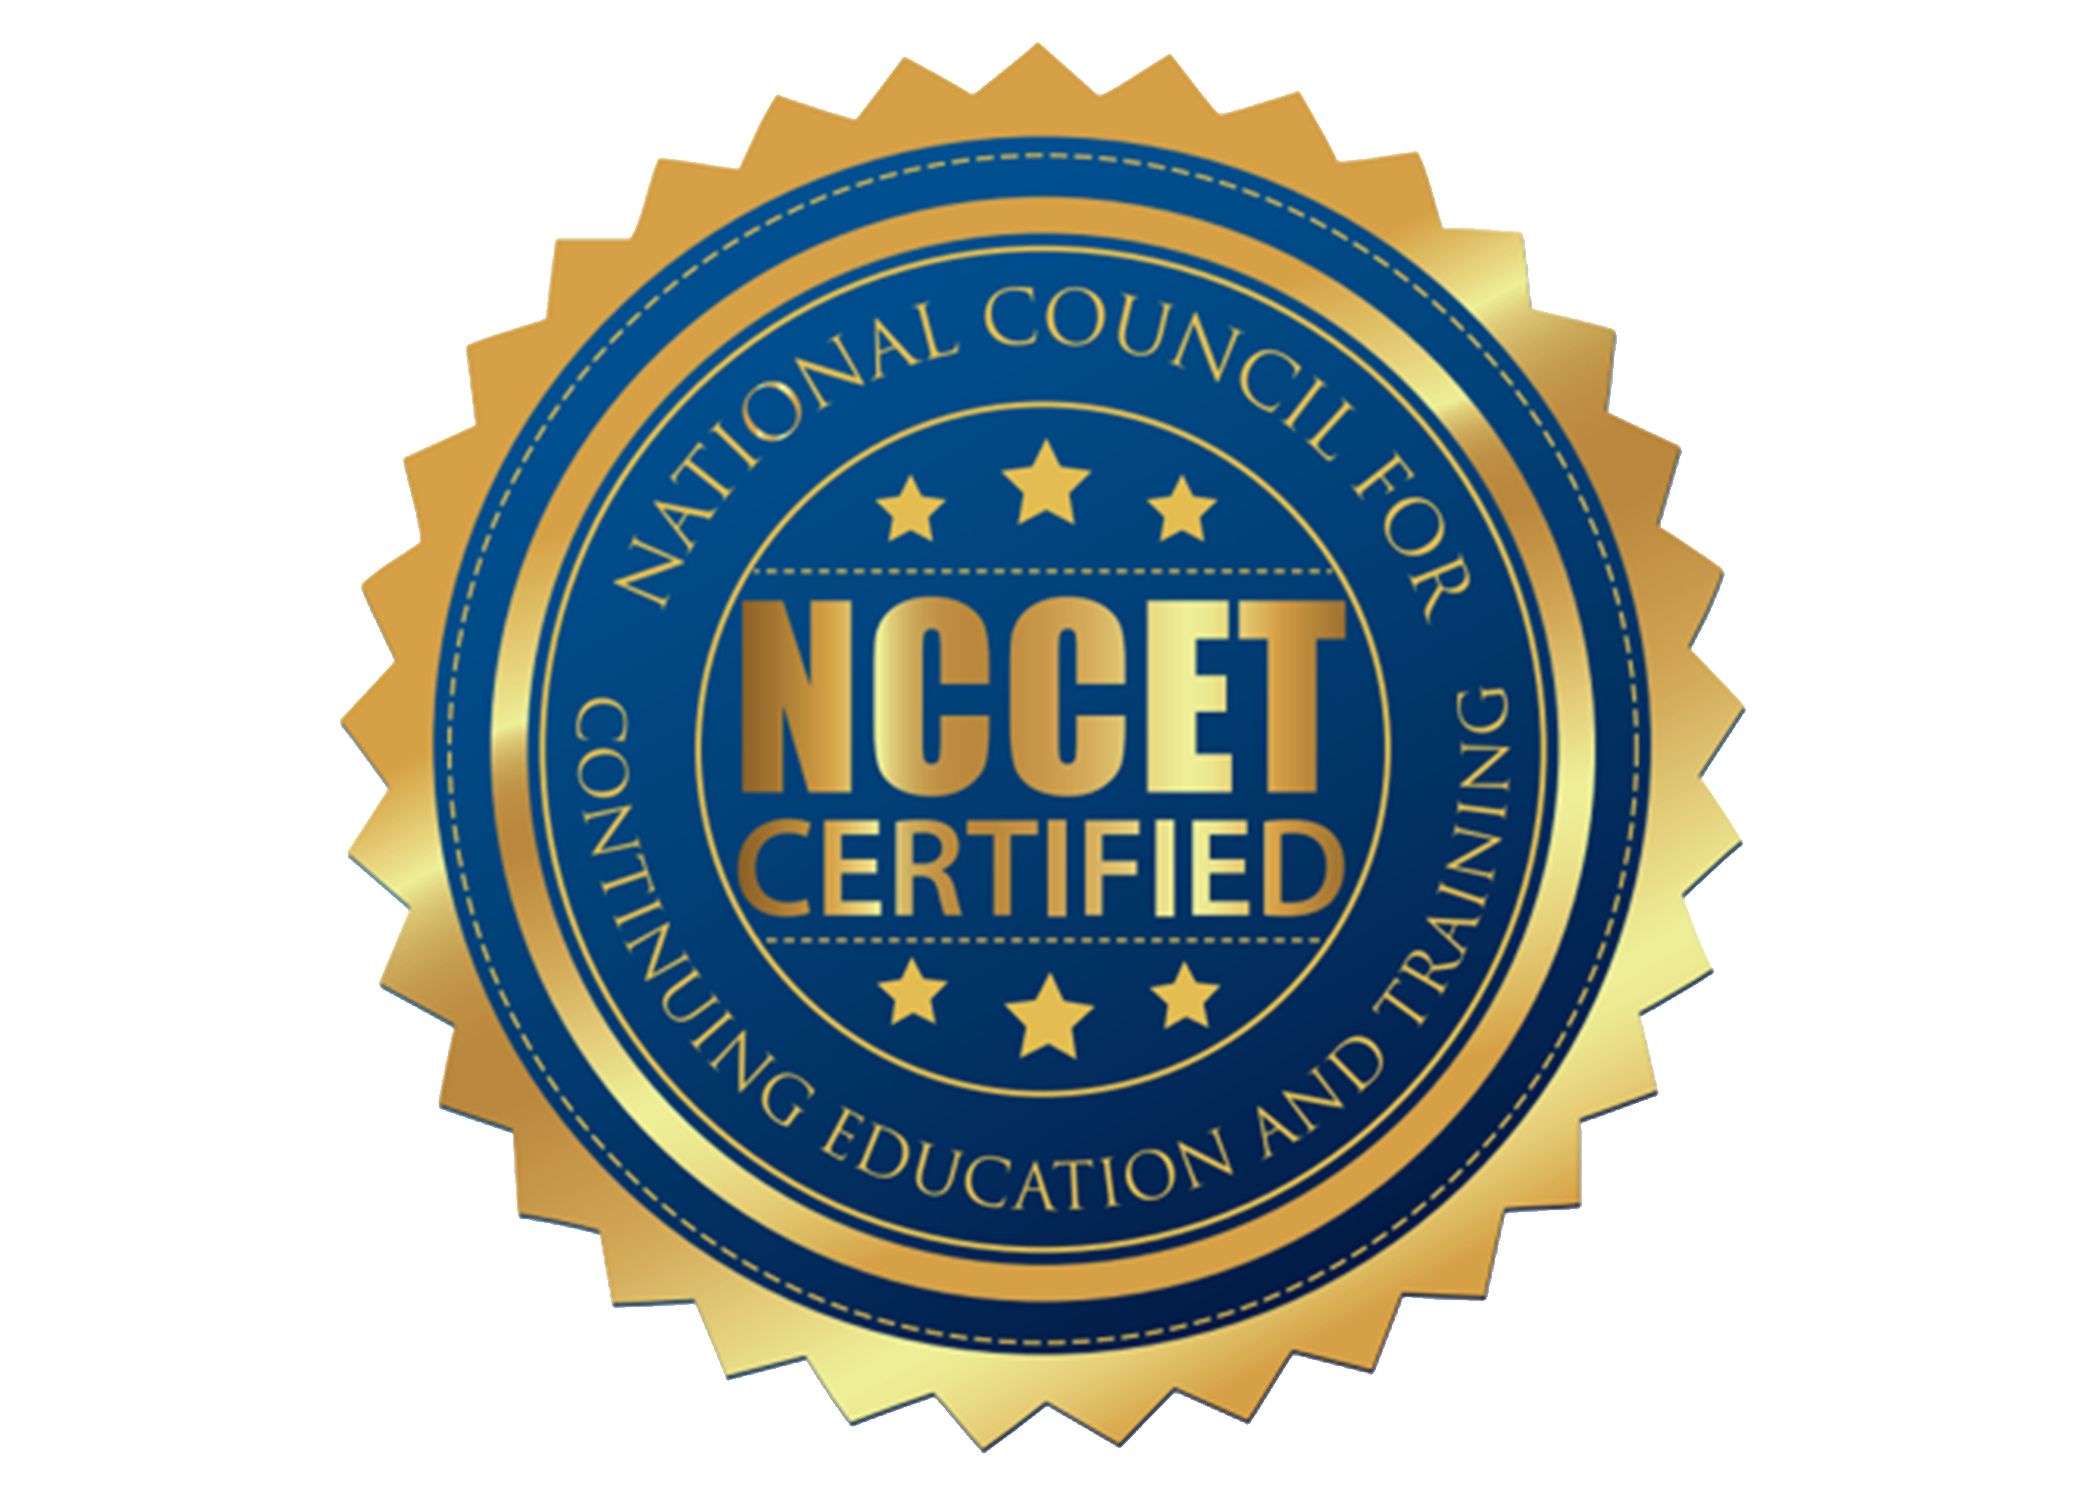 NCCET Certified logo